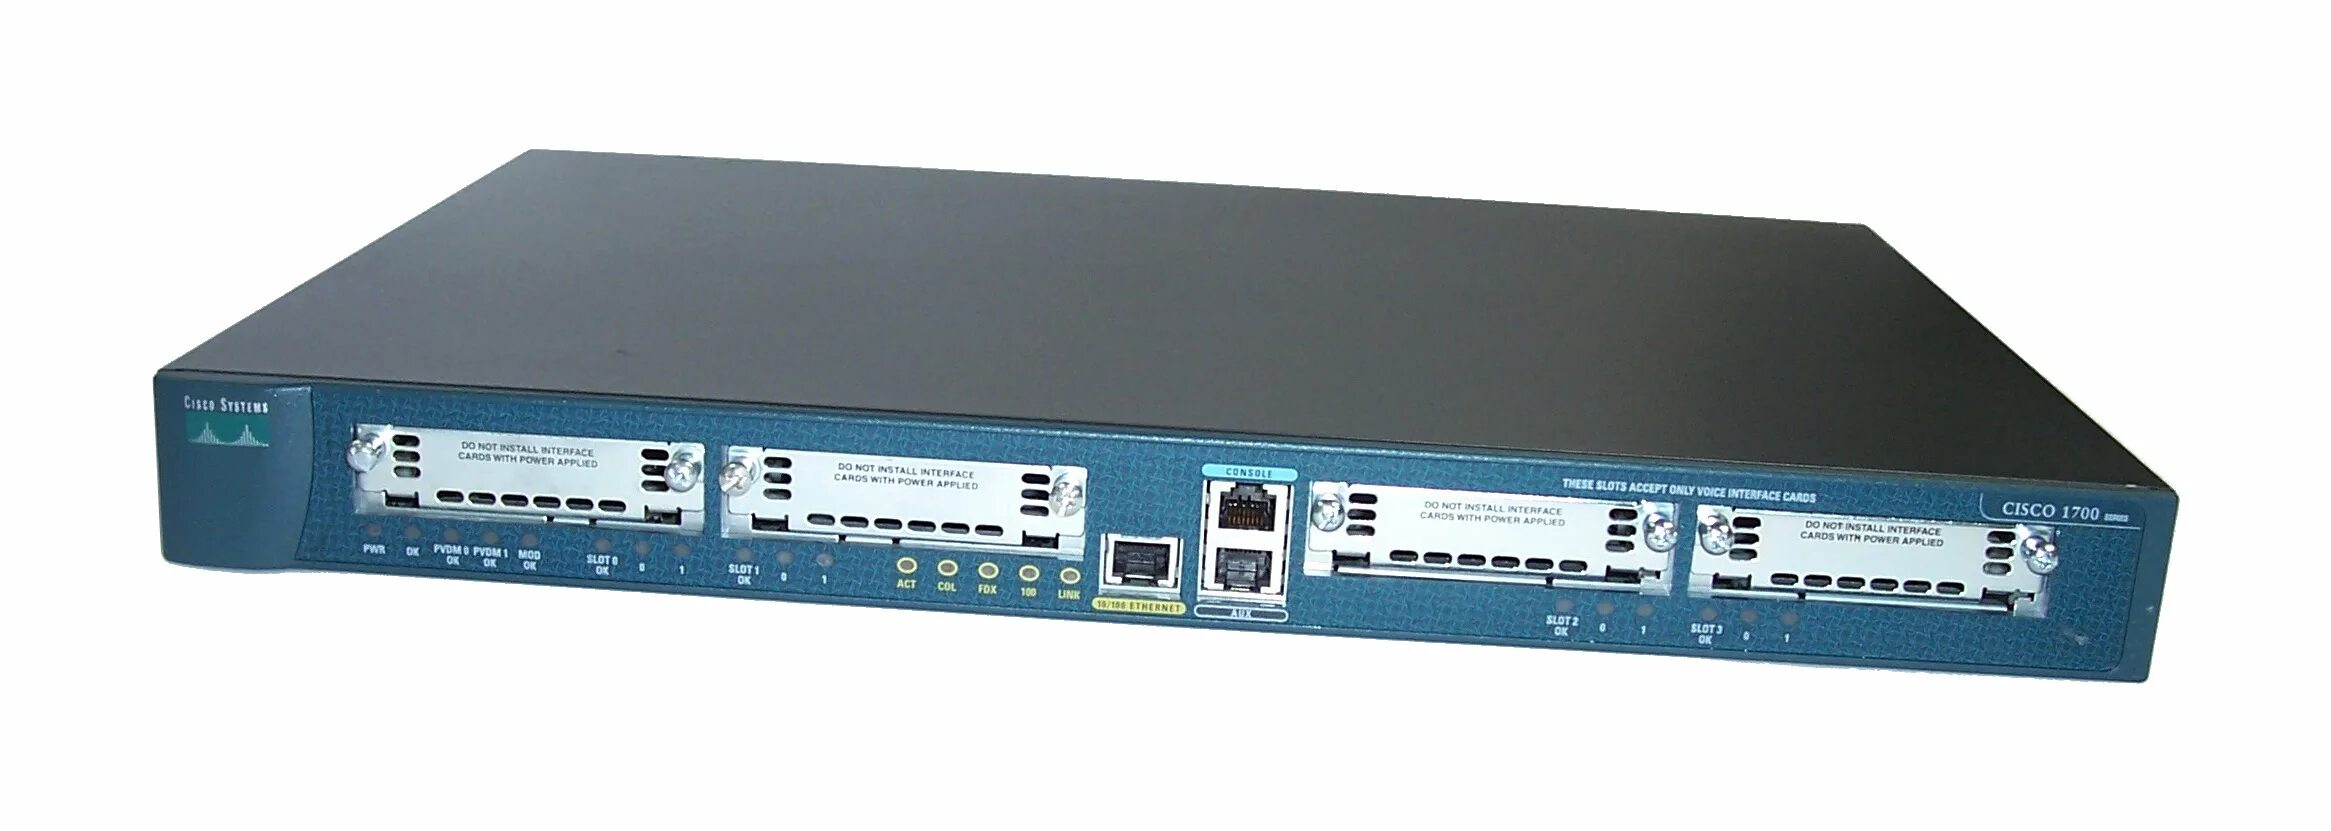 Cisco 1760 маршрутизатор. Cisco 1700 Router. Cisco 1700 Series. Cisco Systems Cisco 1700. C 1700